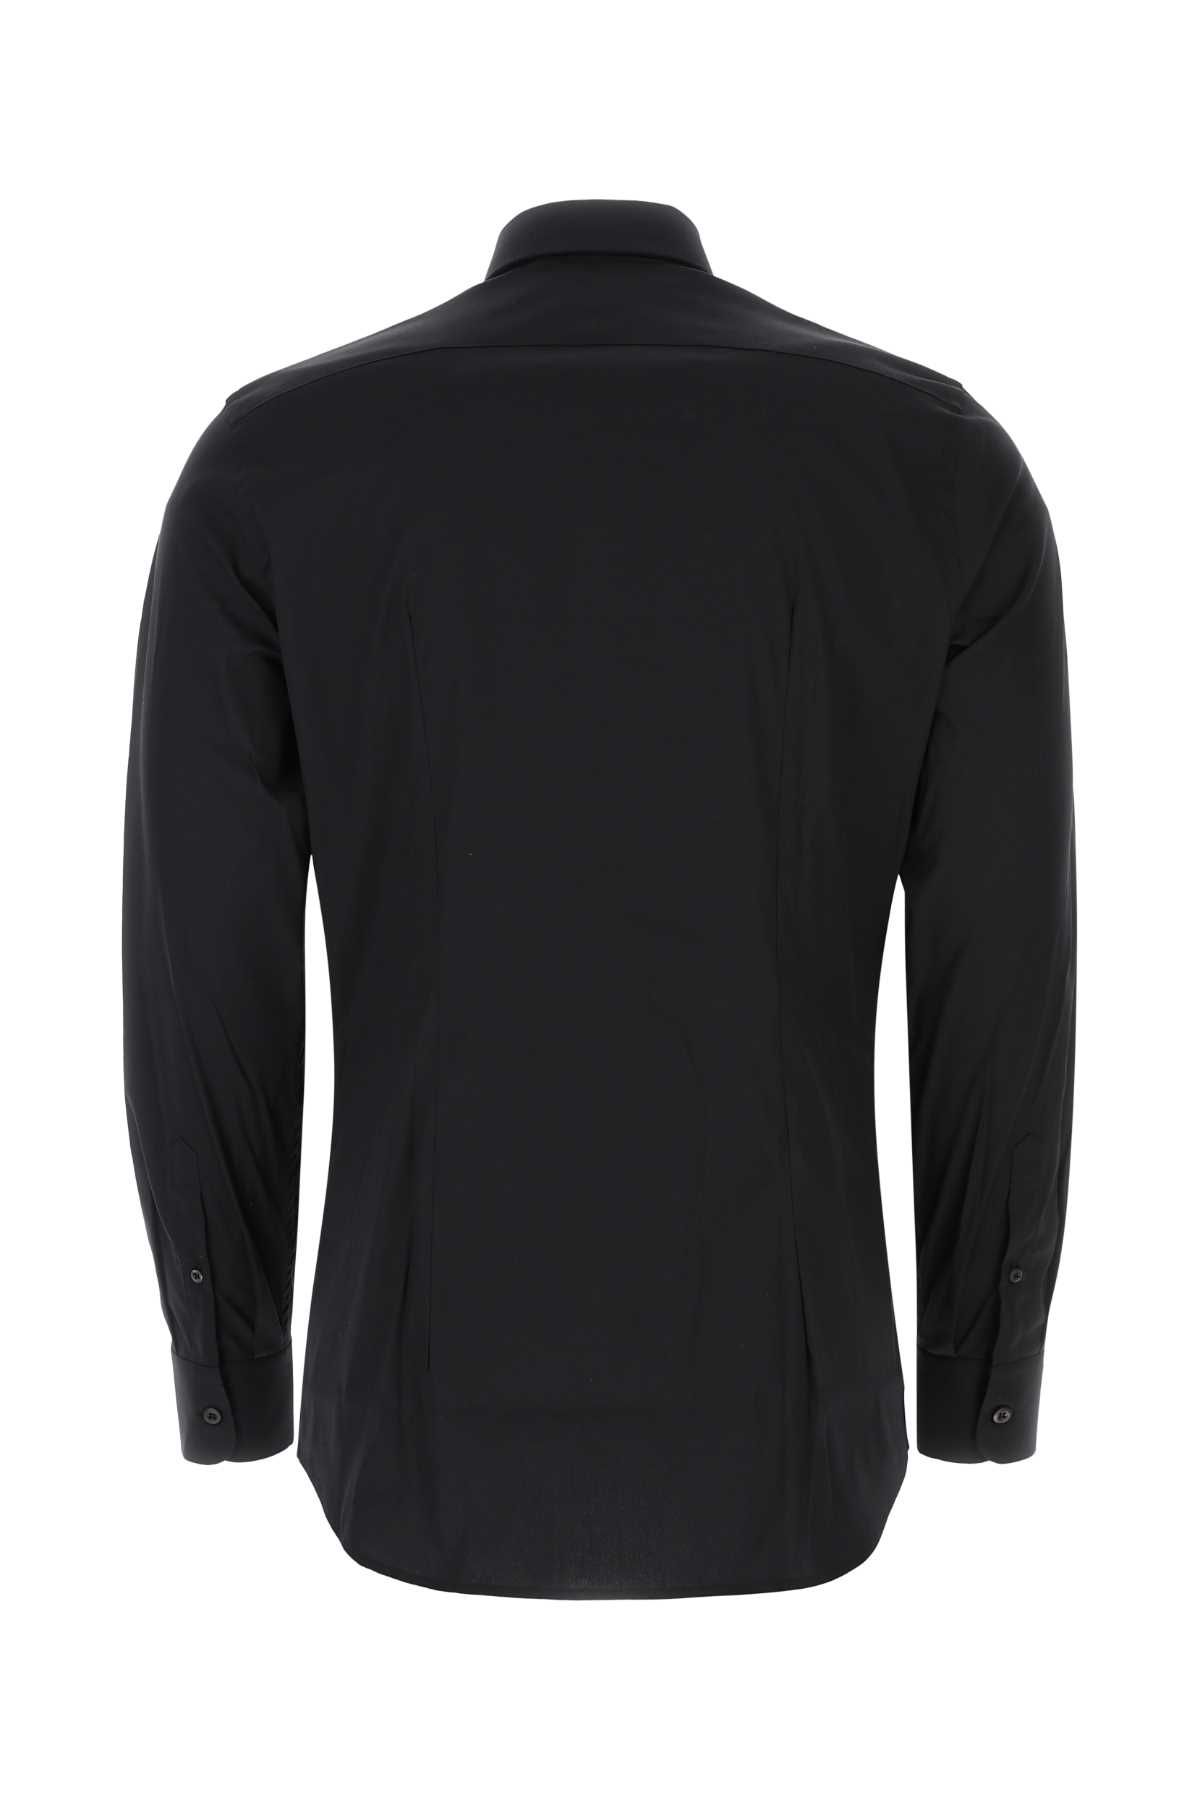 Prada Black Poplin Shirt In F0002